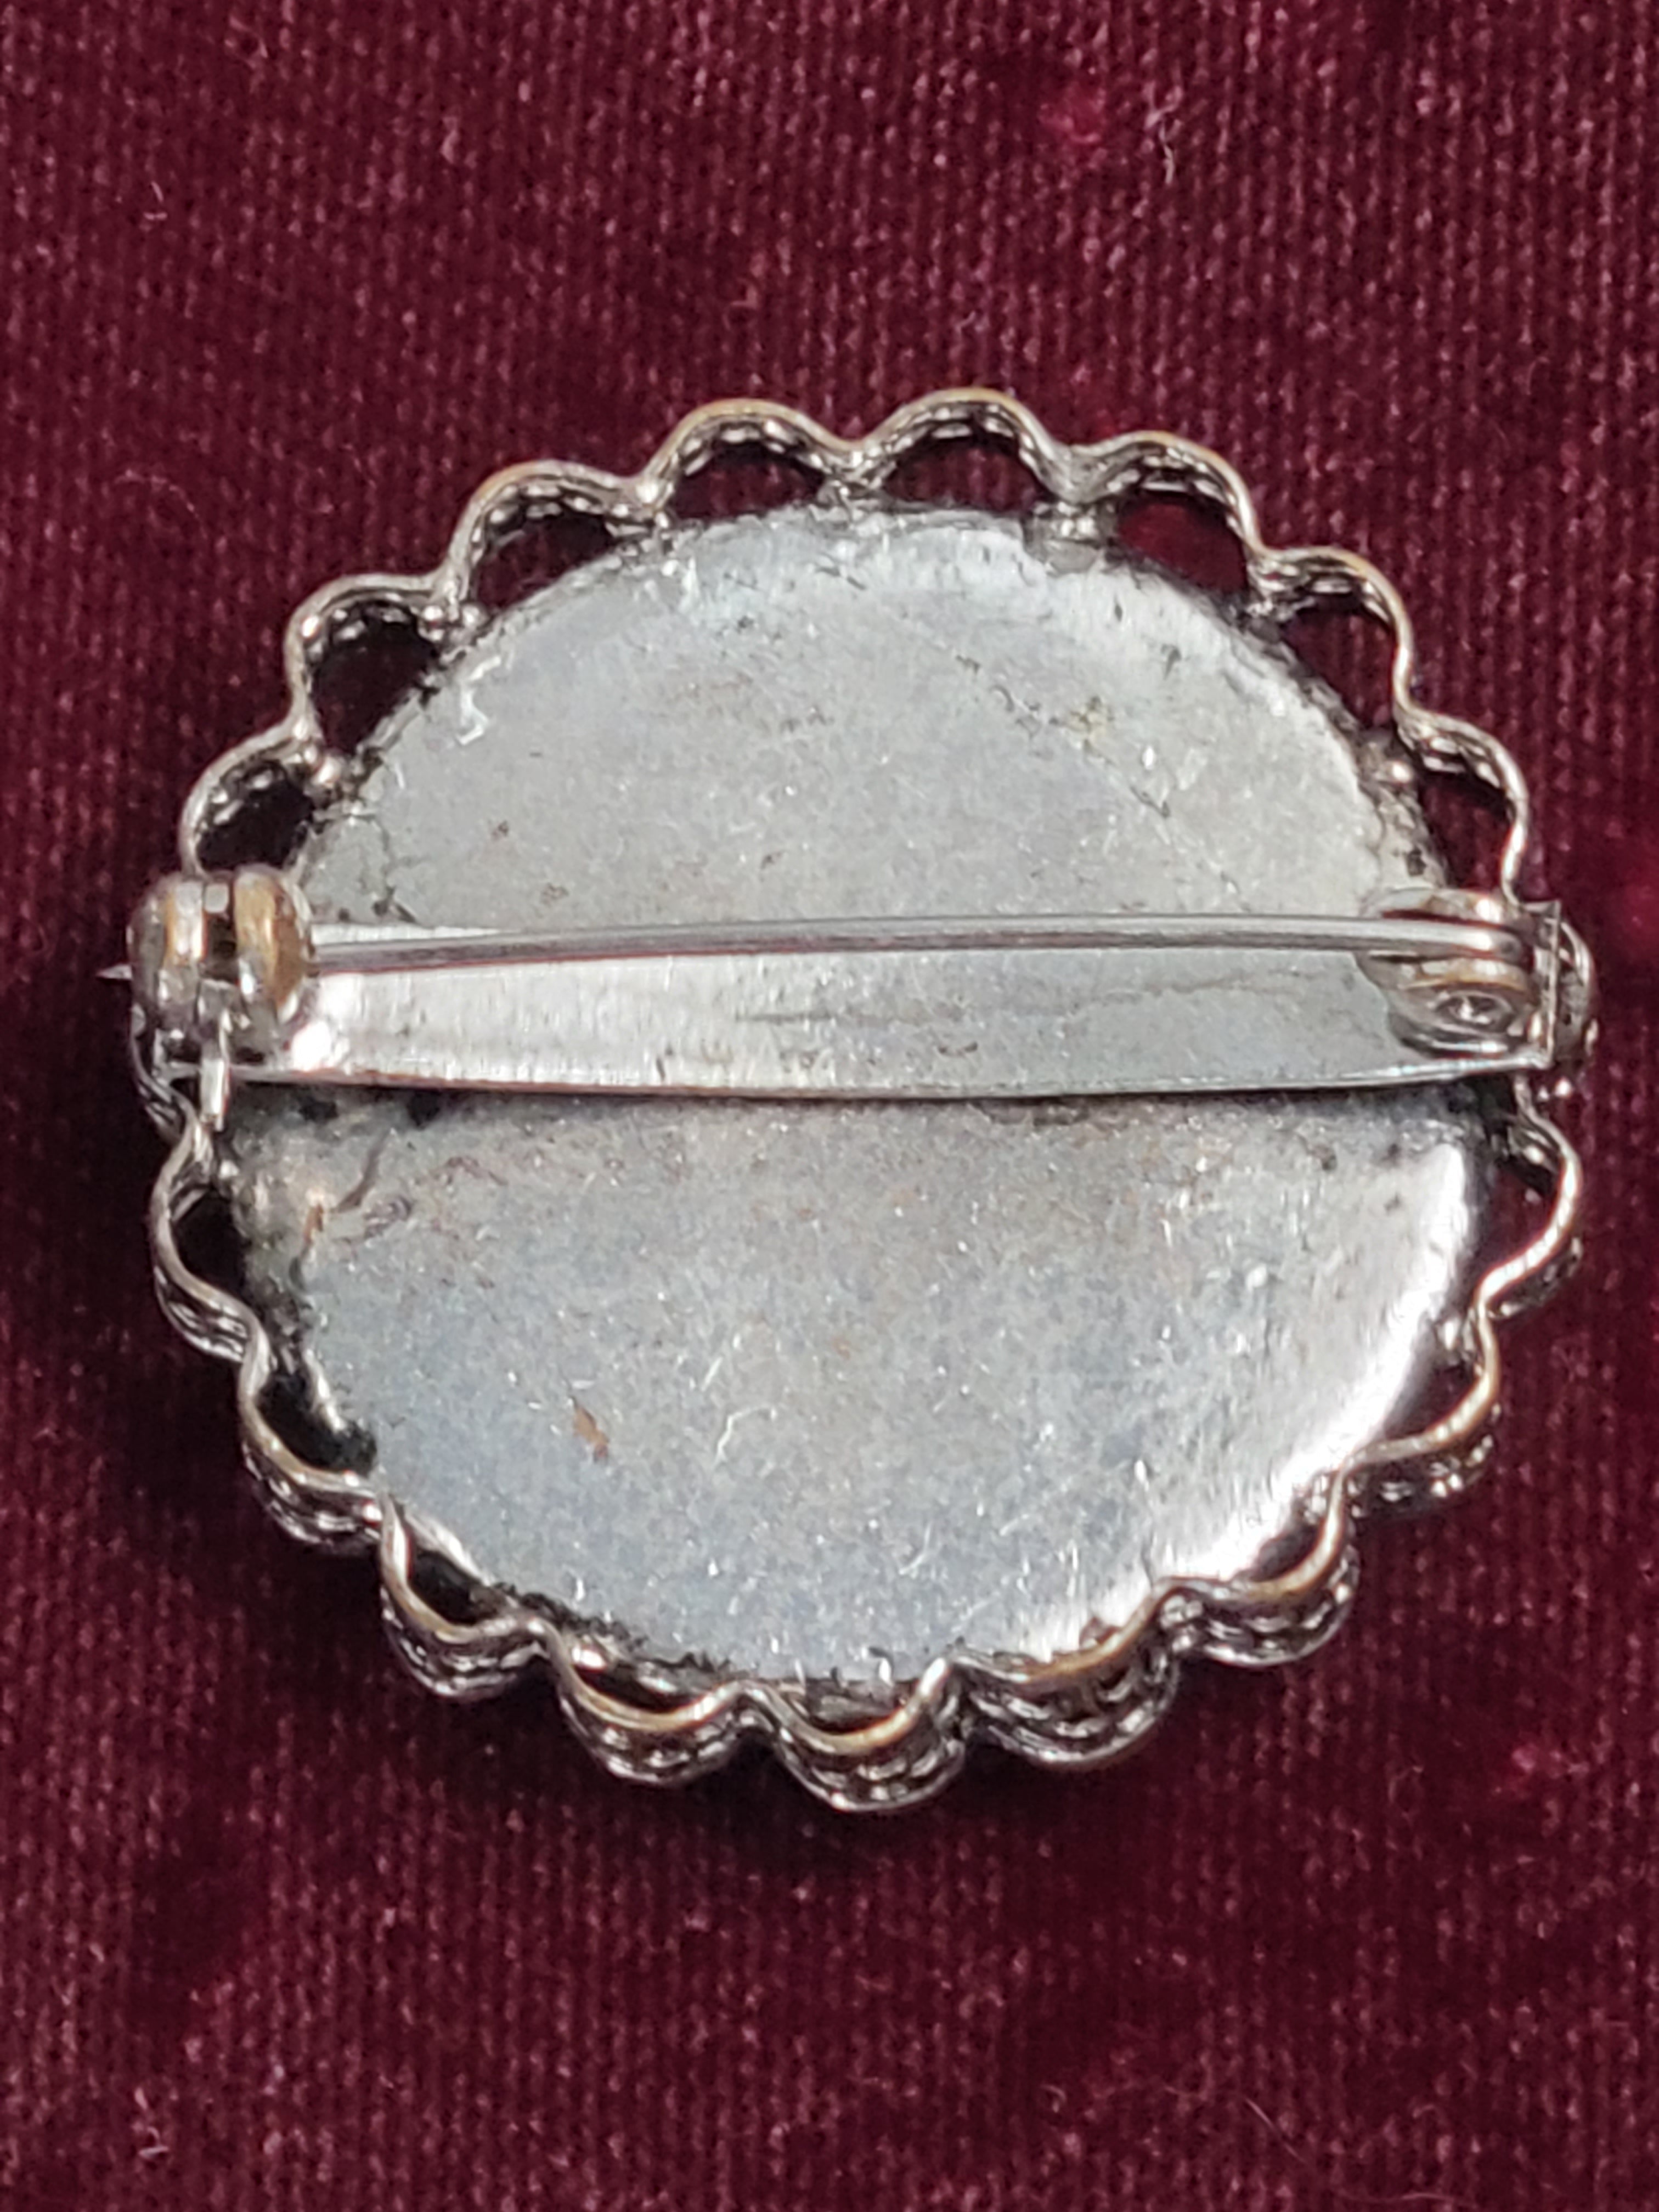 Vintage embroidered violets brooch pin